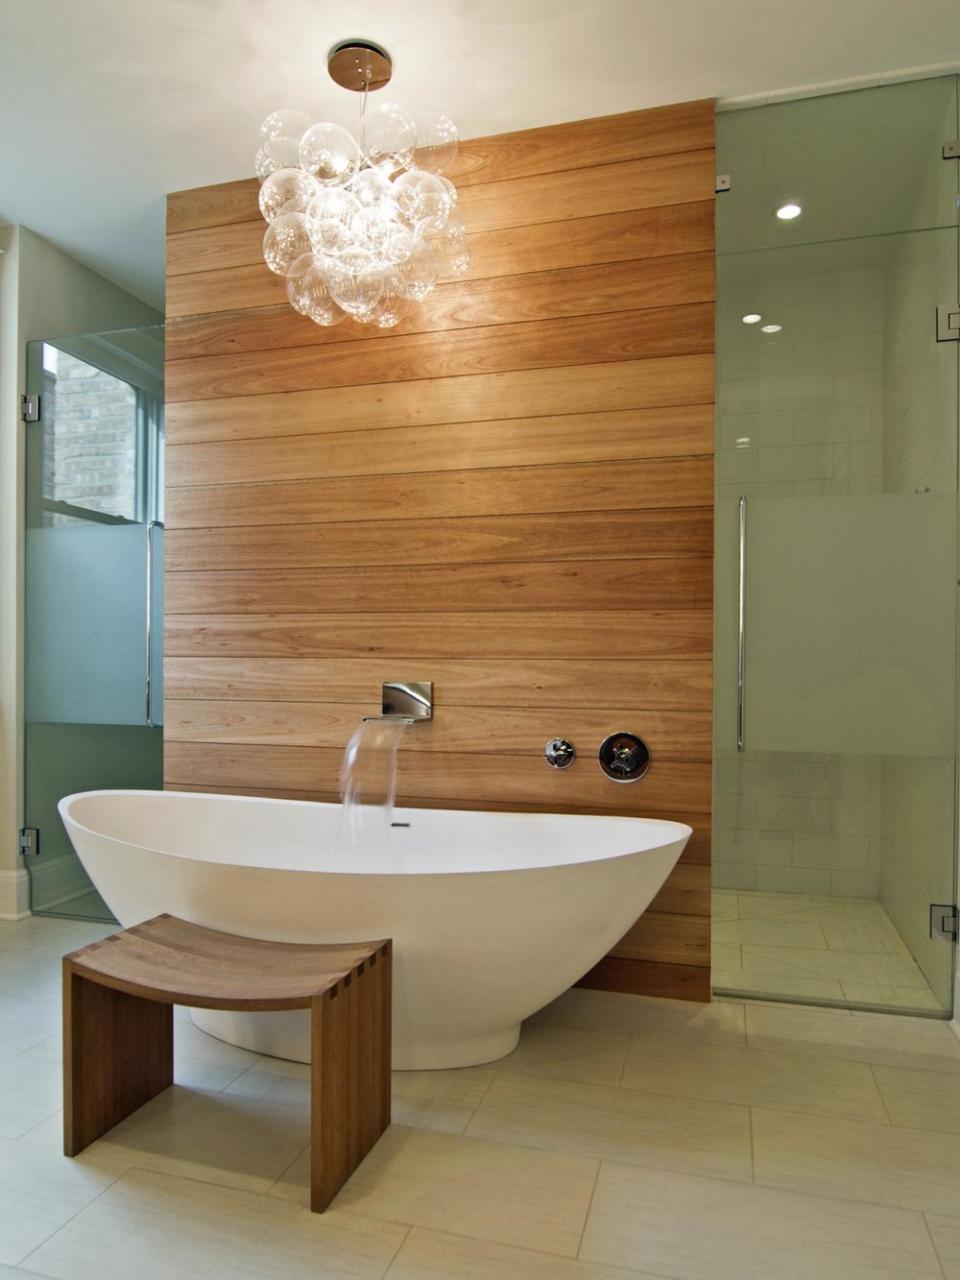 Five Spa Bathroom Ideas Fix it For You!